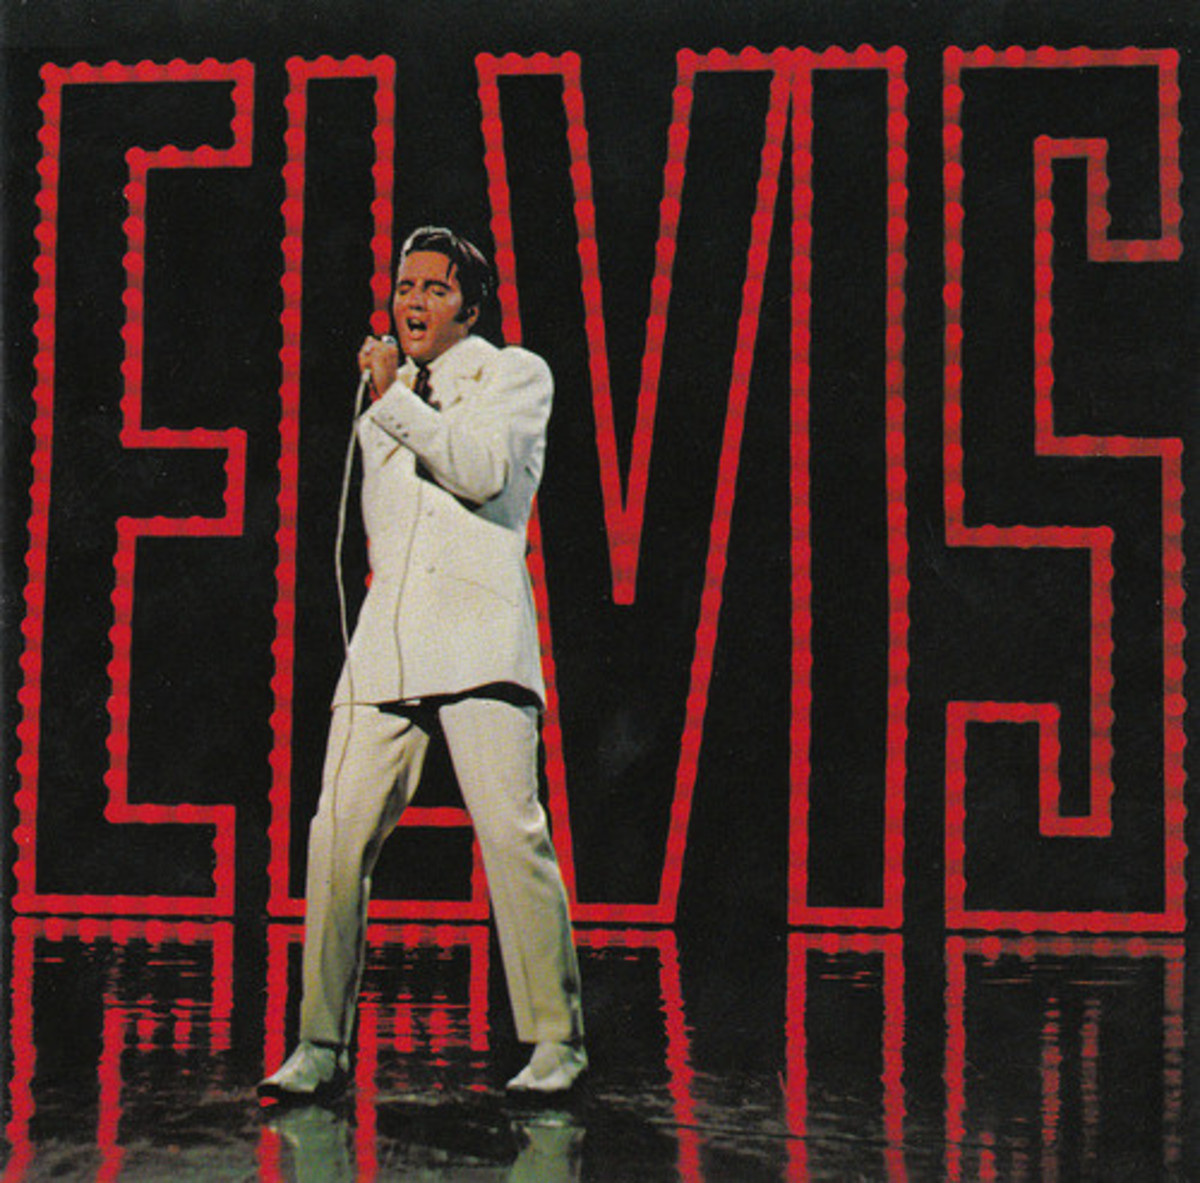 Elvis Comeback Special on NBC